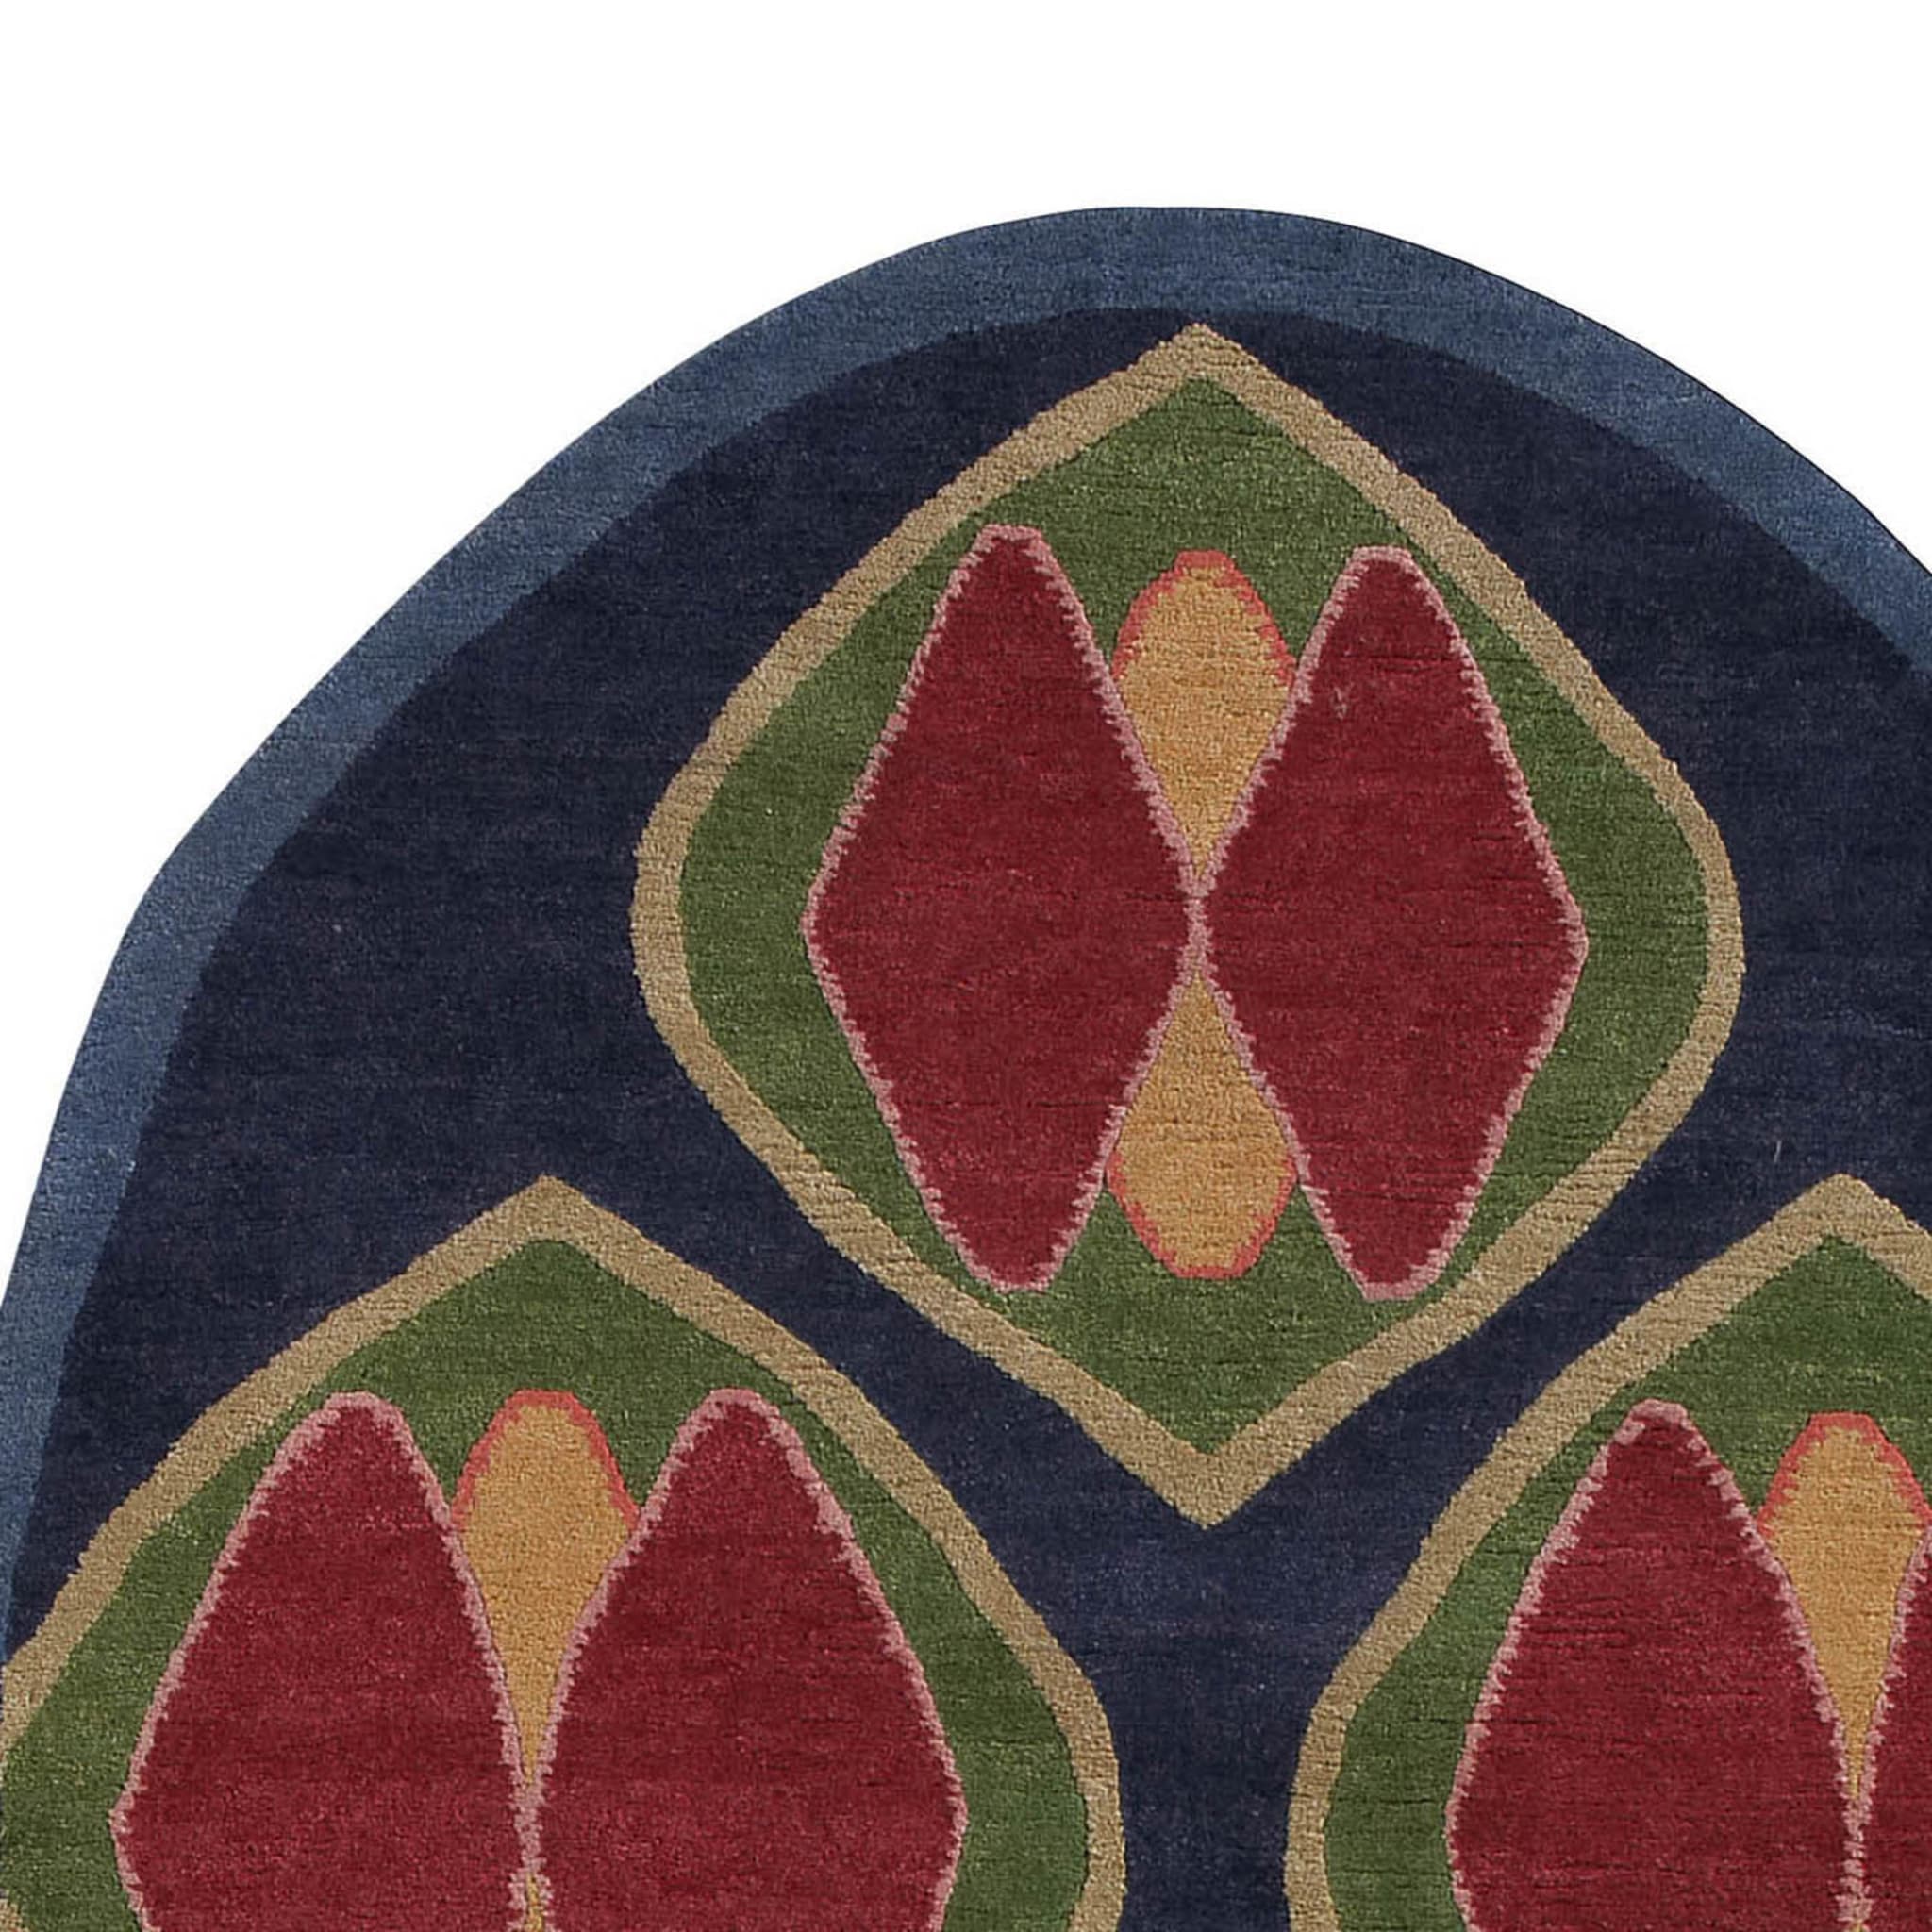 MCH3 Tapestry by M. C. Hamel - Post Design - Alternative view 1